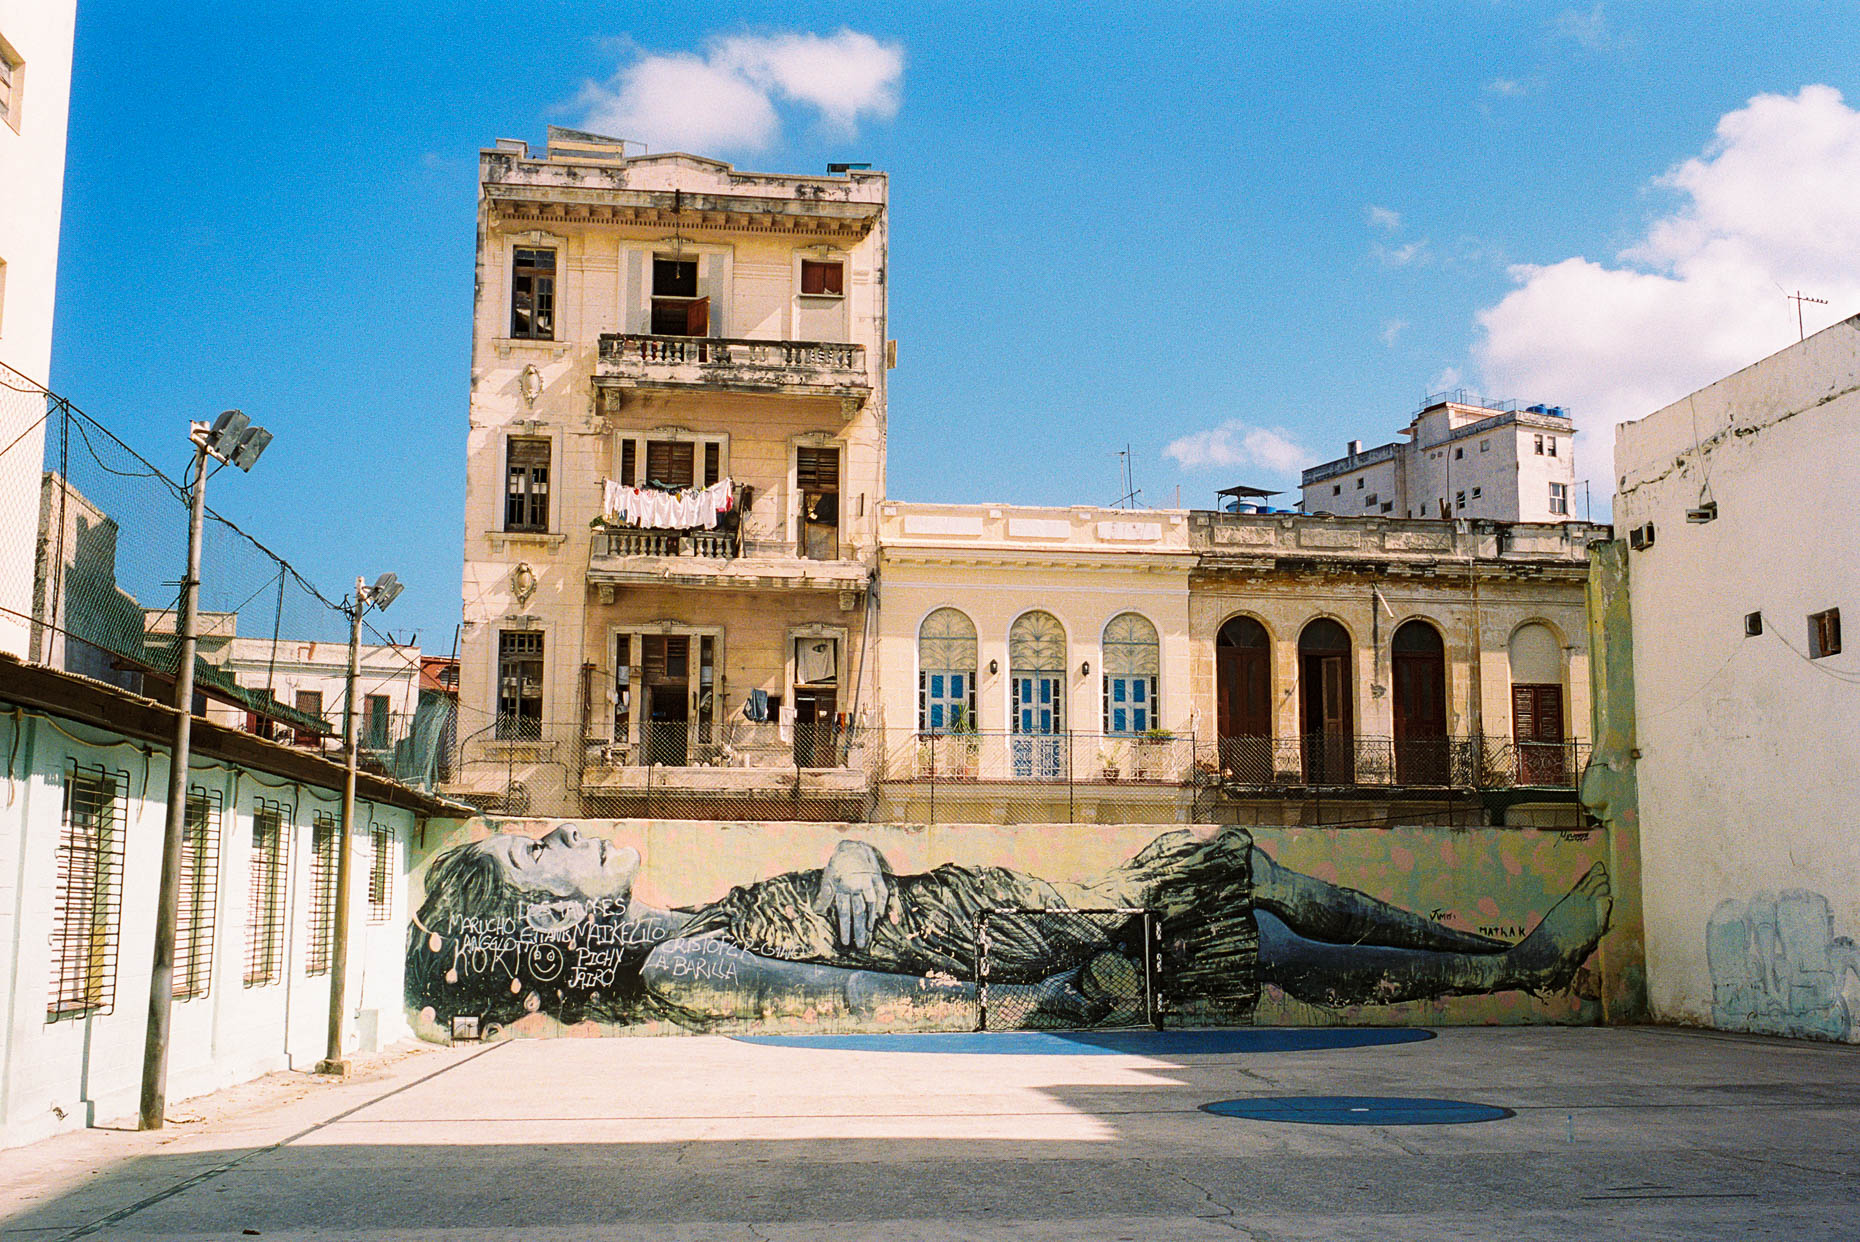 DanBigelowPhoto_Cuba-21